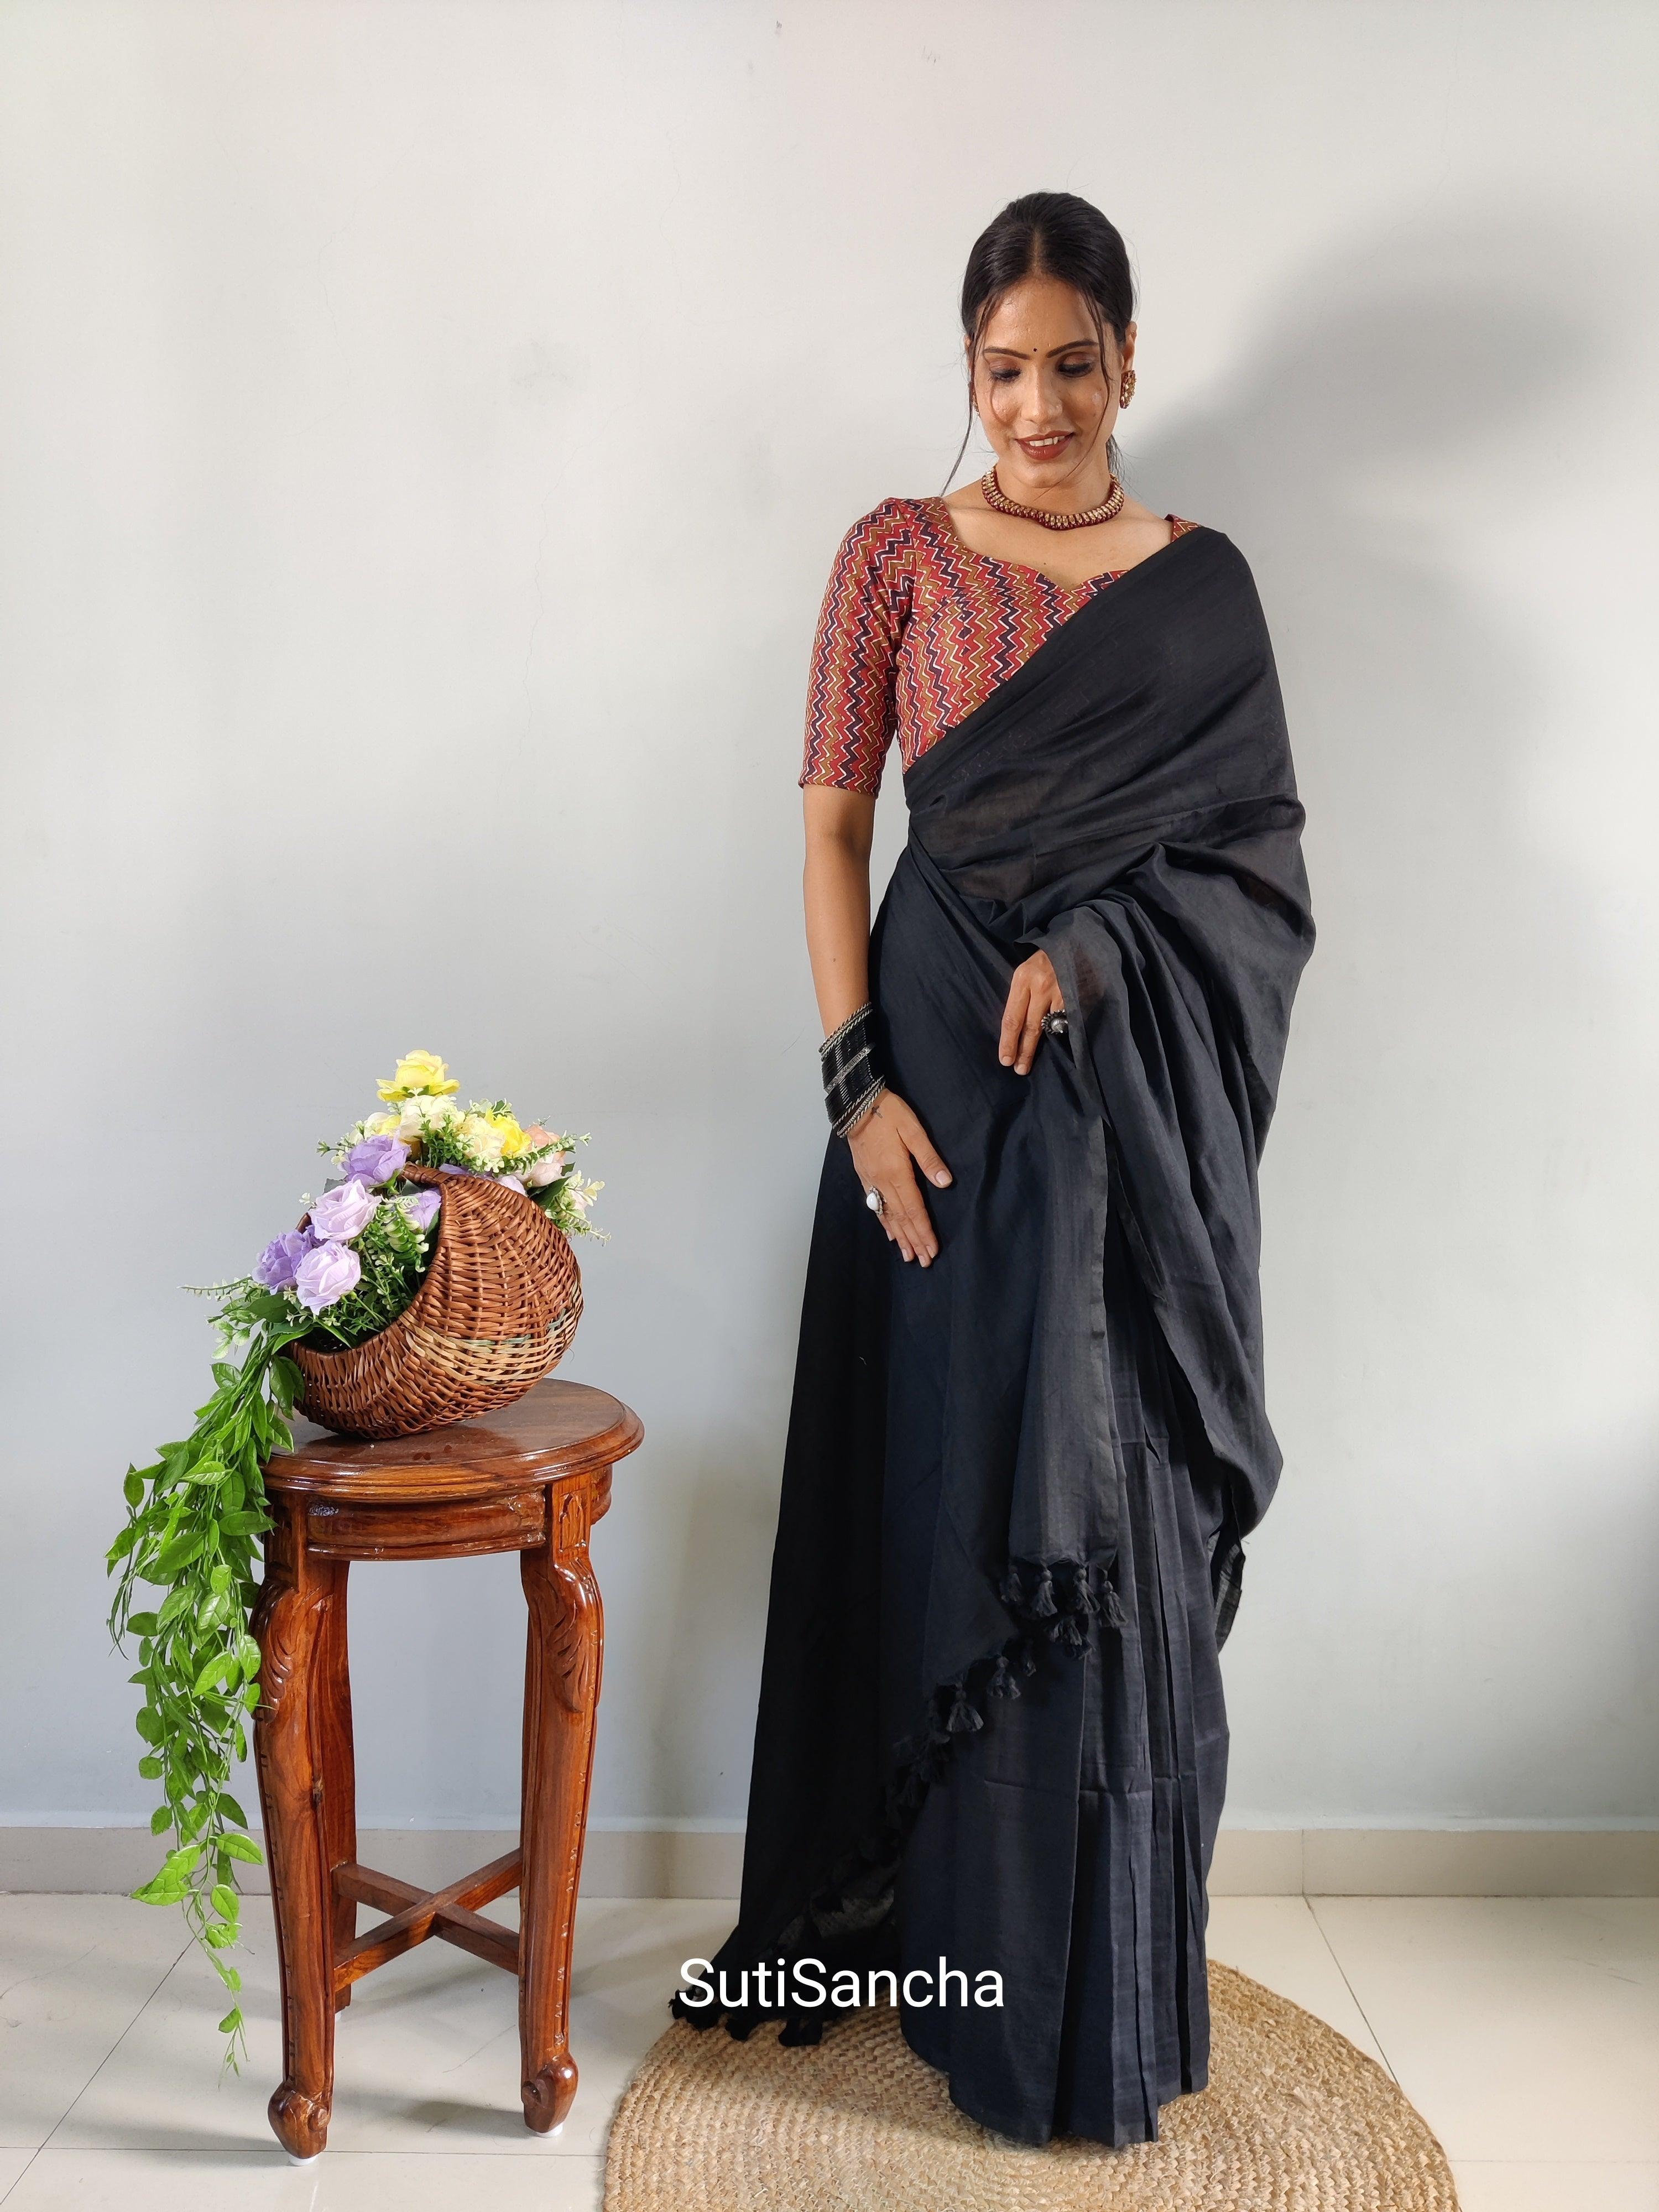 Sutisancha Black Khadi Saree & designer Blouse - Suti Sancha